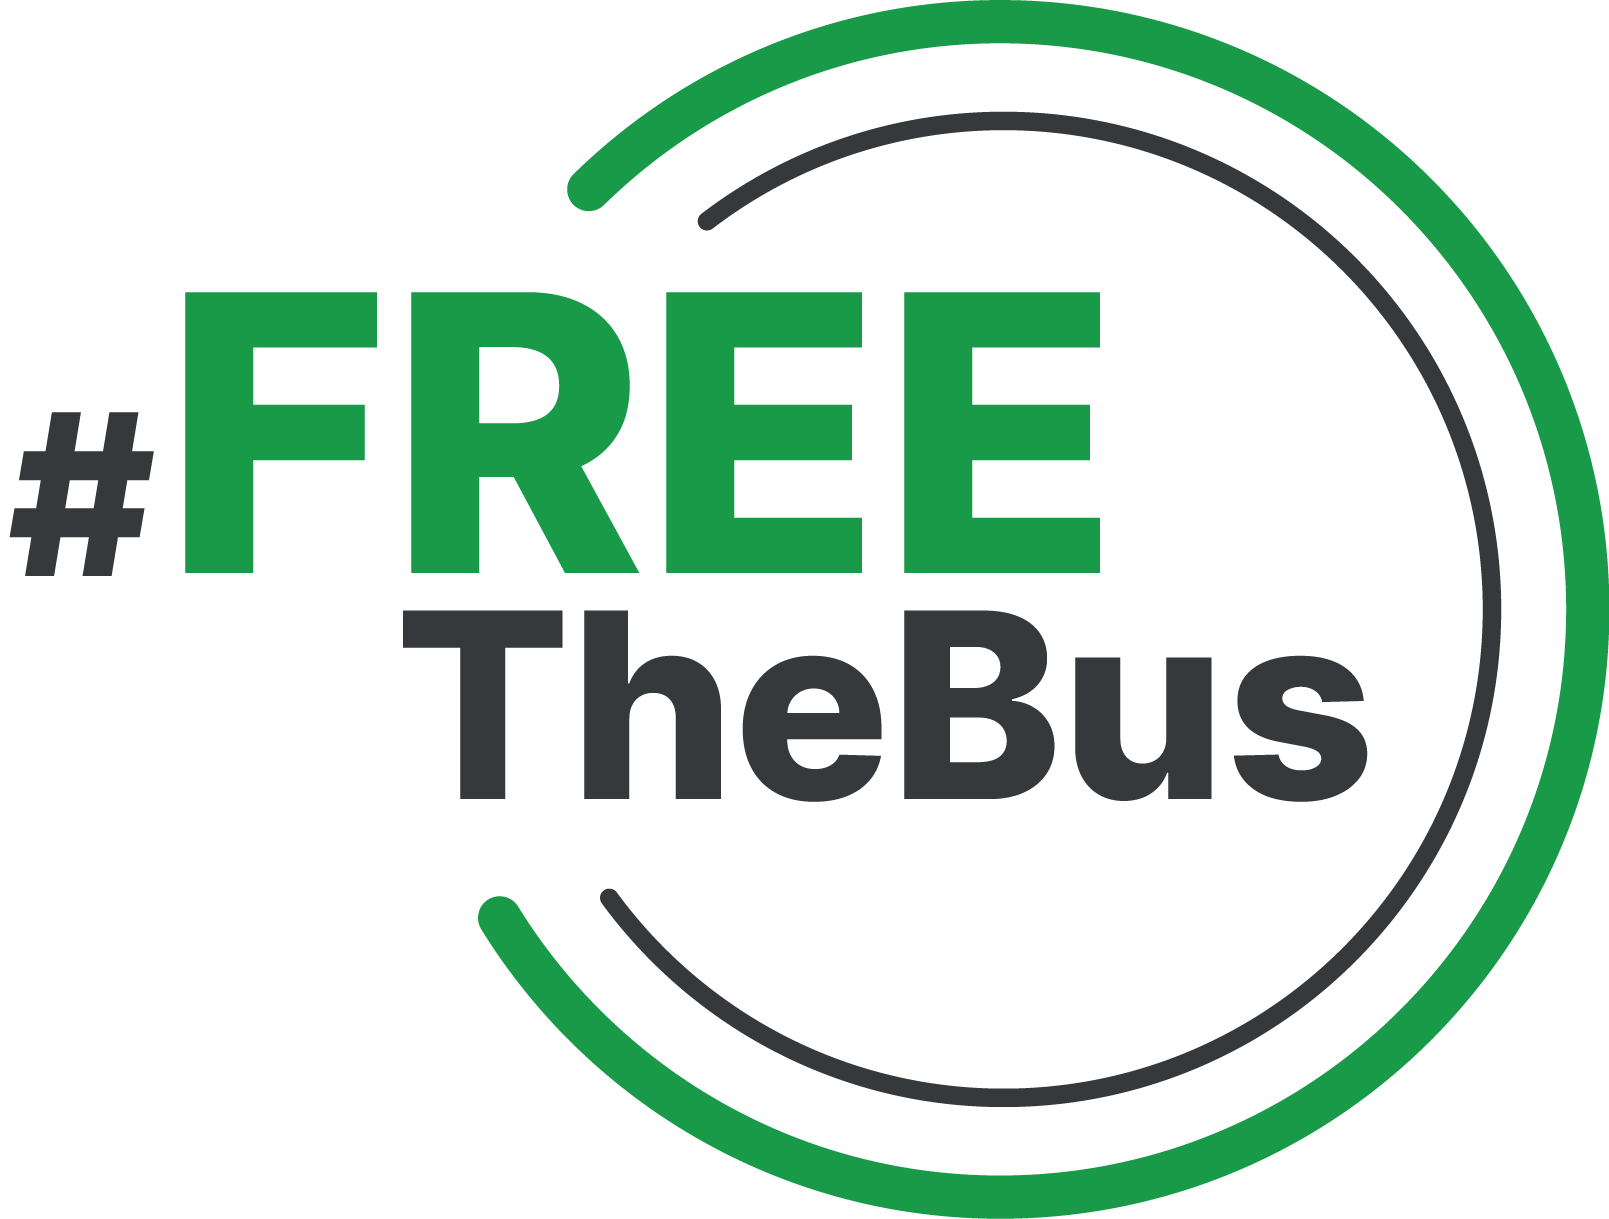 Free the bus logo